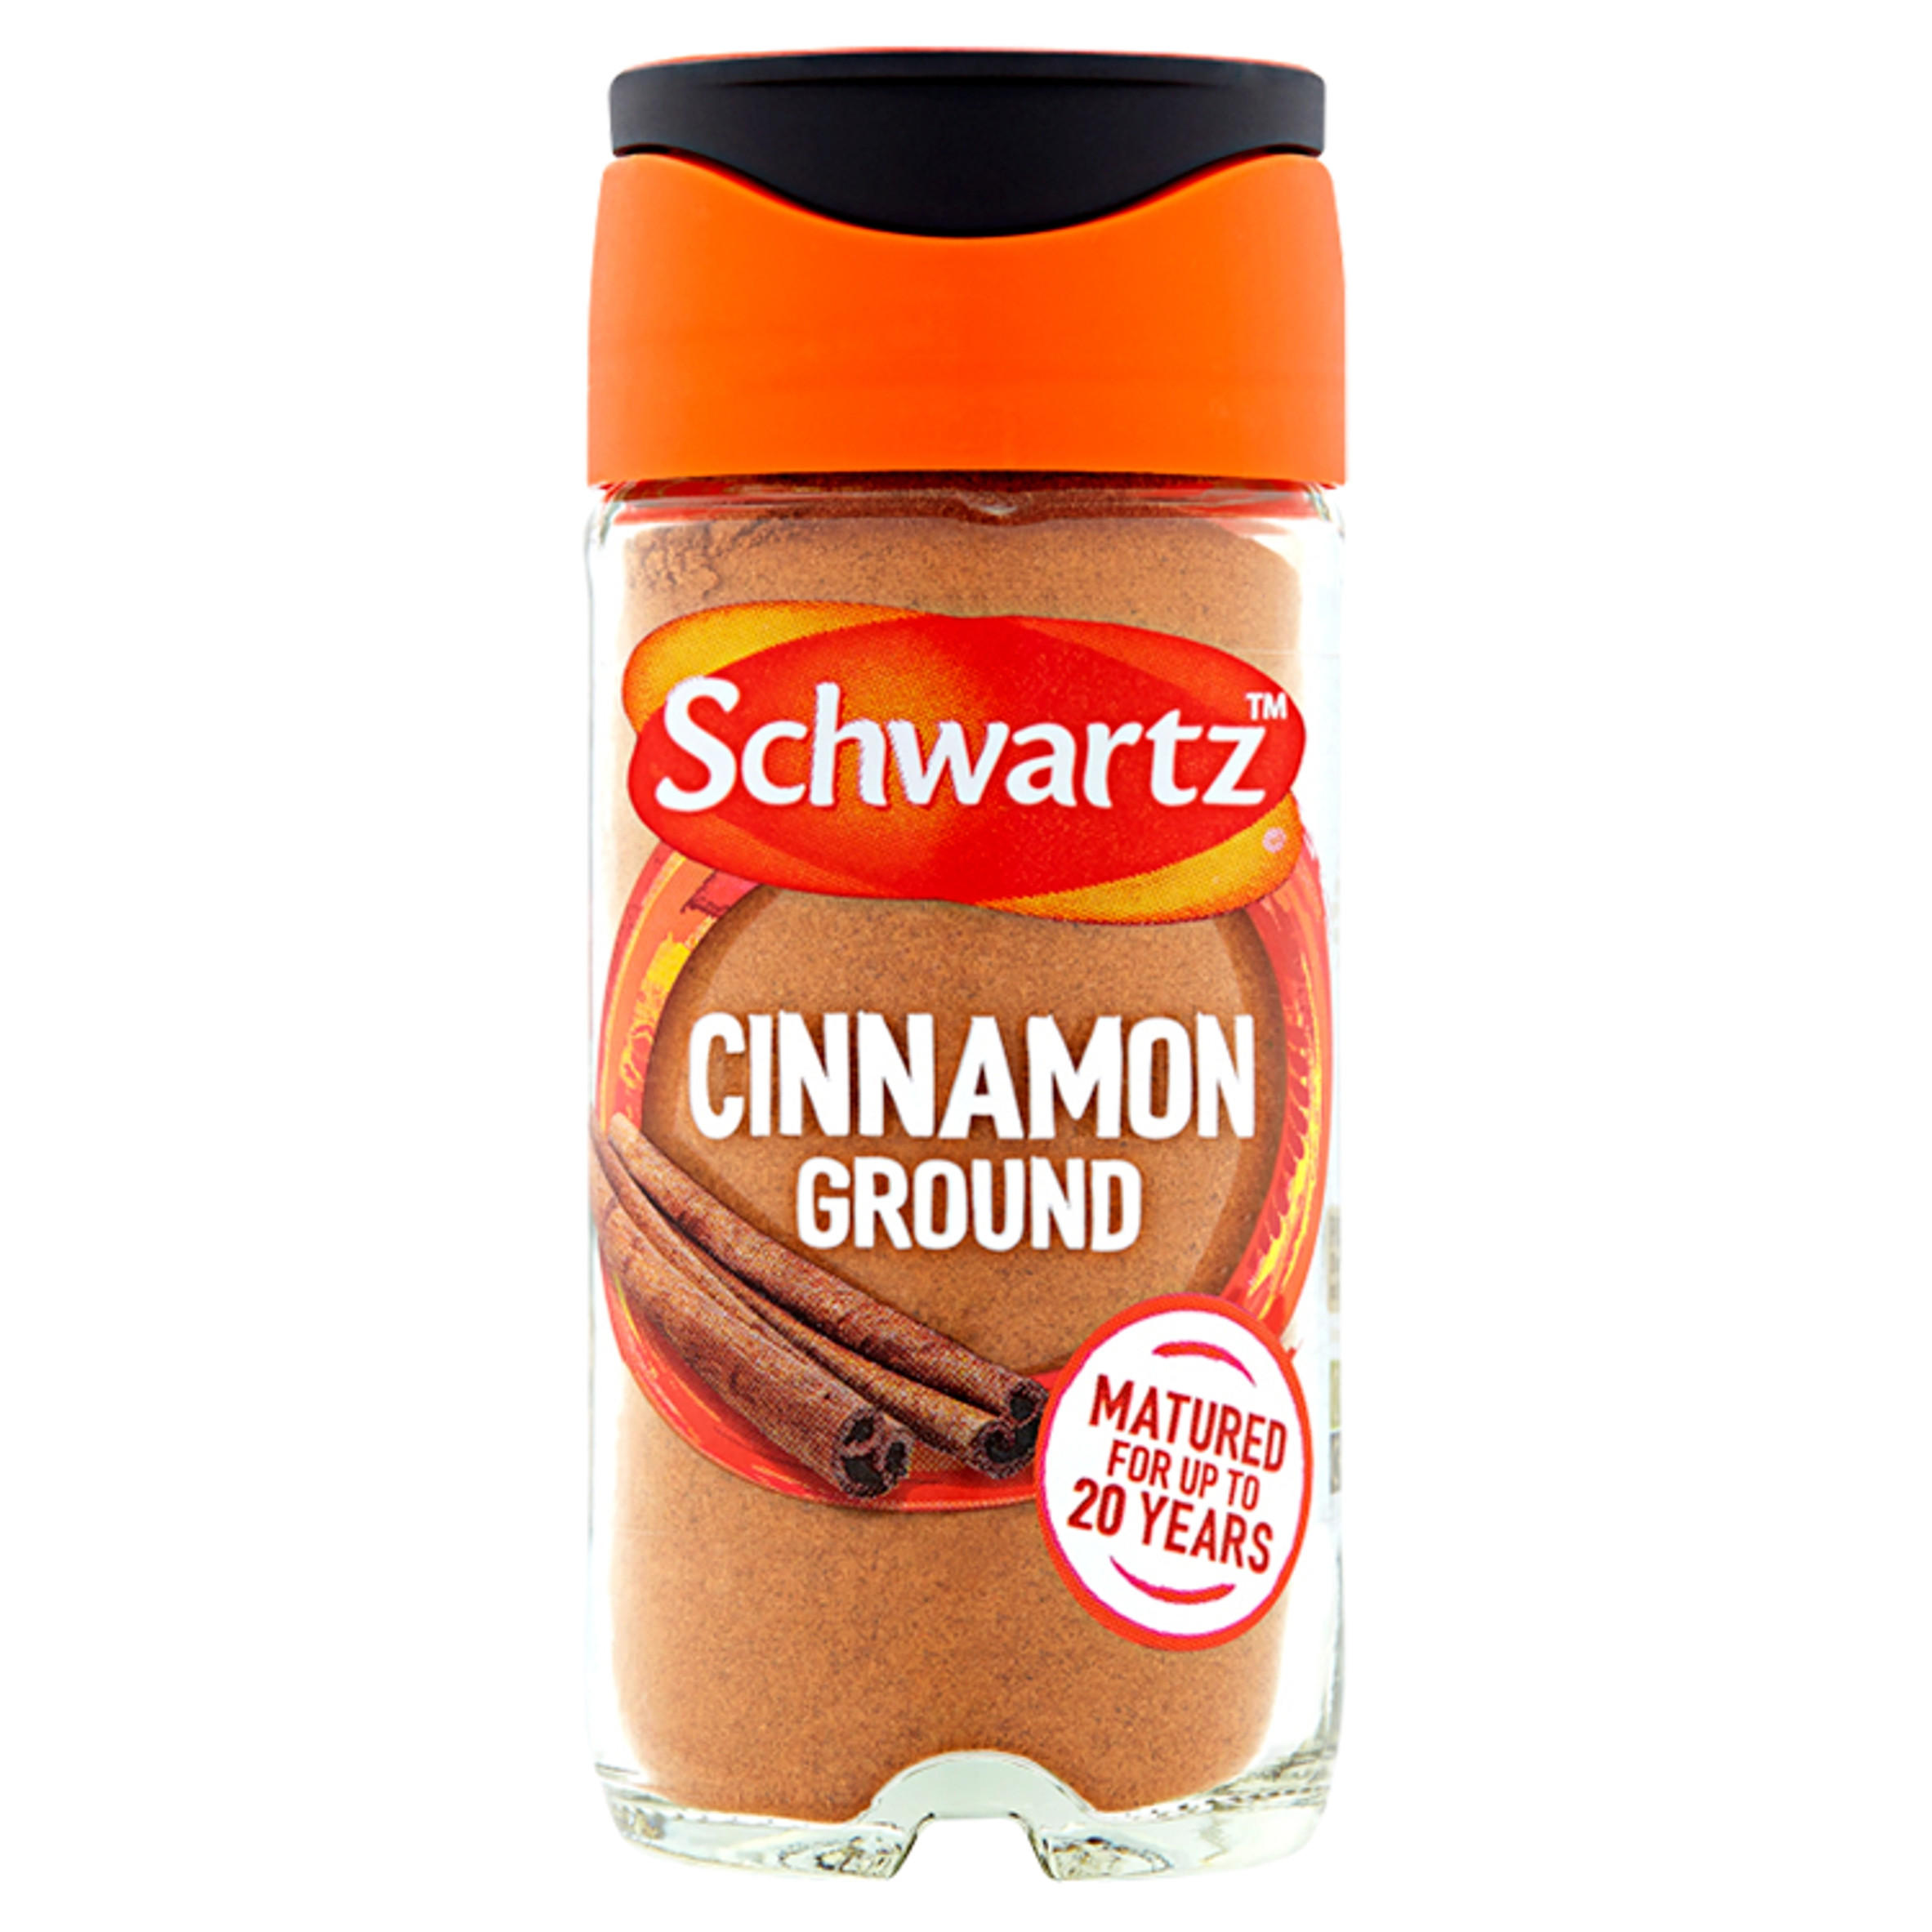 Schwartz Ground Cinnamon 39g Herbs Spices And Seasonings Iceland Foods